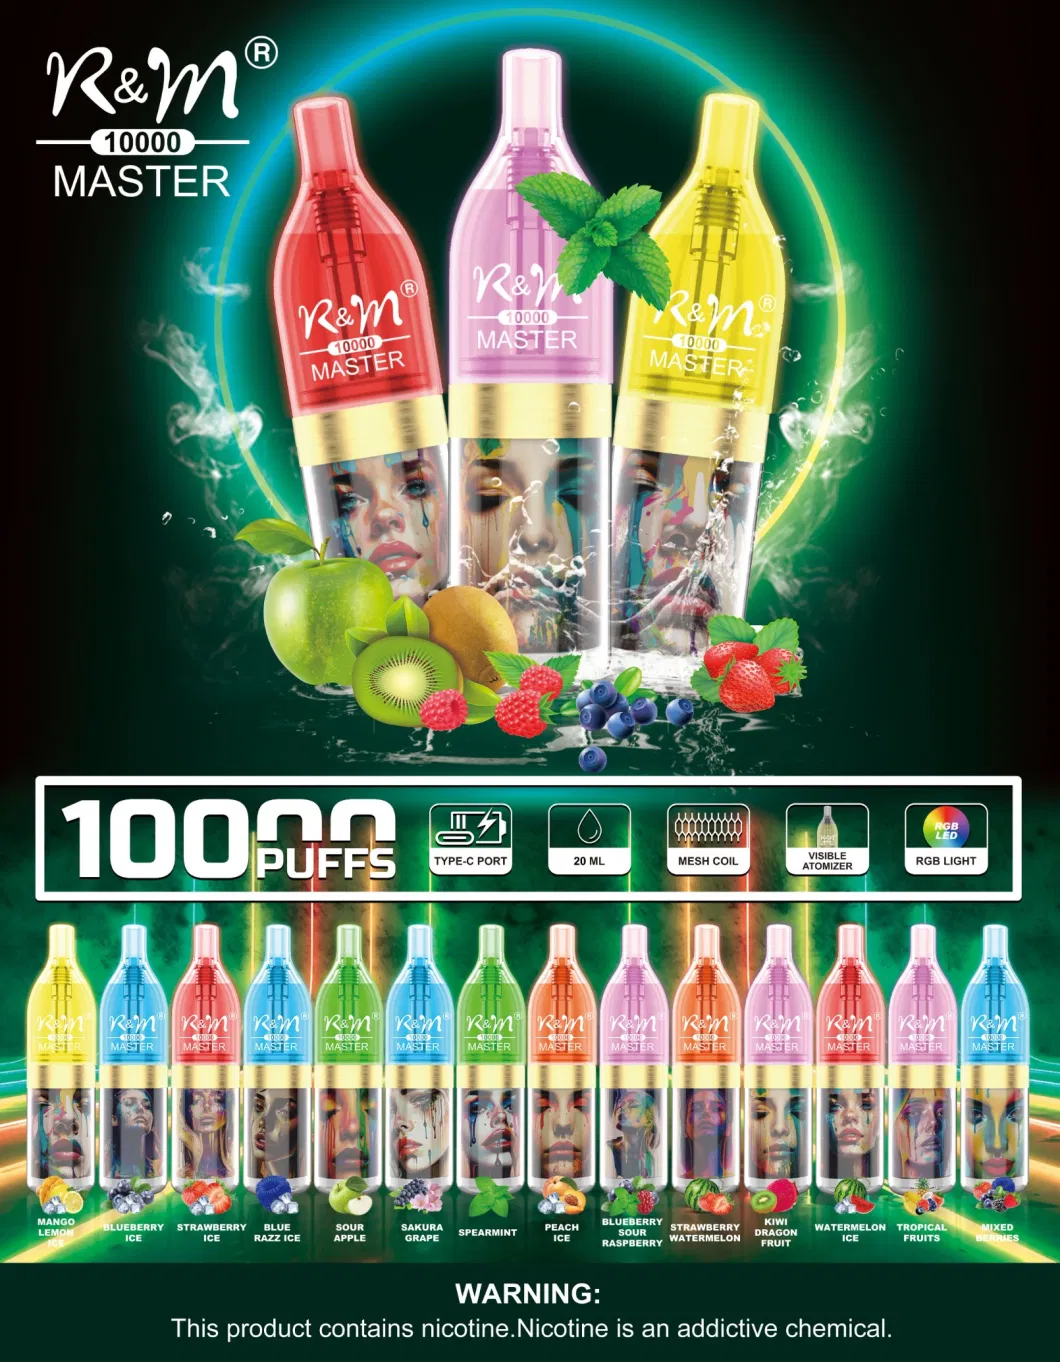 R&M Legend 10K Puffs China Original 5% 2% Nicotine Free OEM Brand Manufacturer Disposable Vape